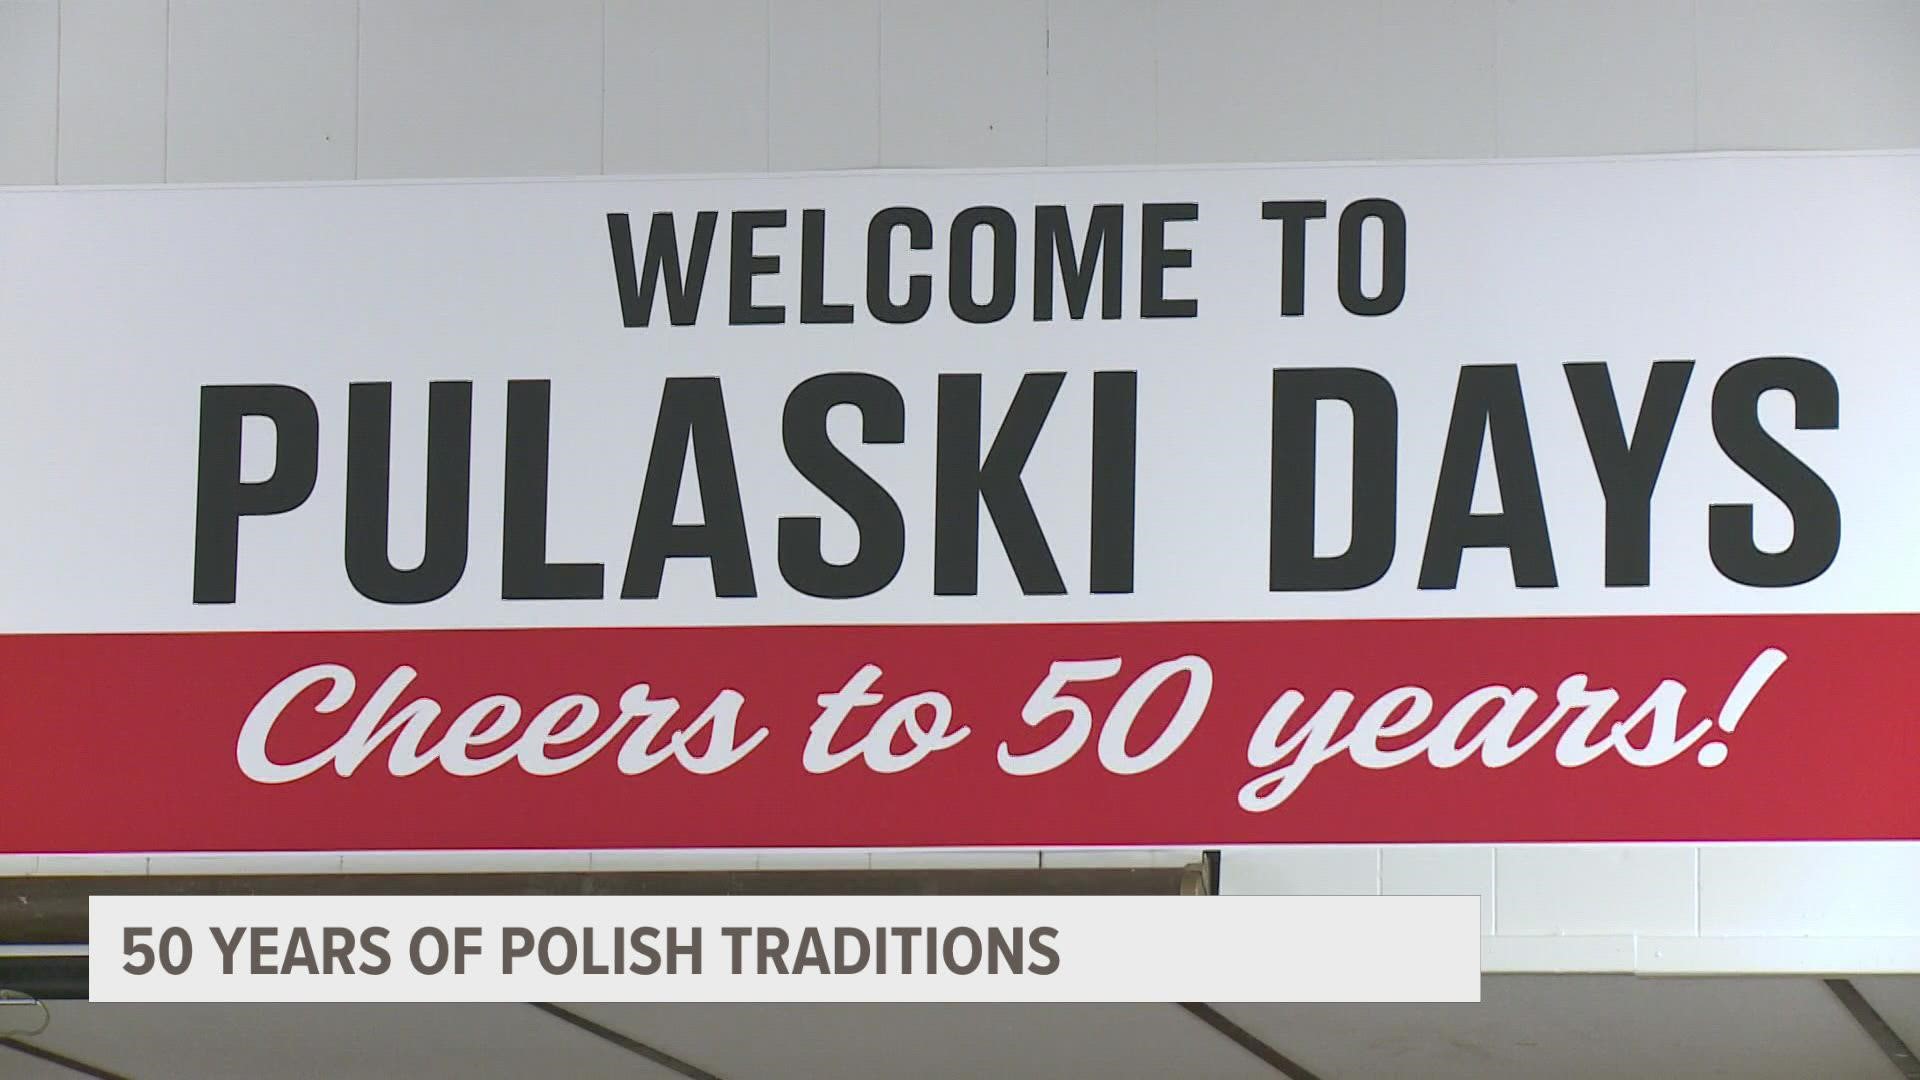 Pulaski Days celebrates 50 years of Polish American Heritage in Grand Rapids.